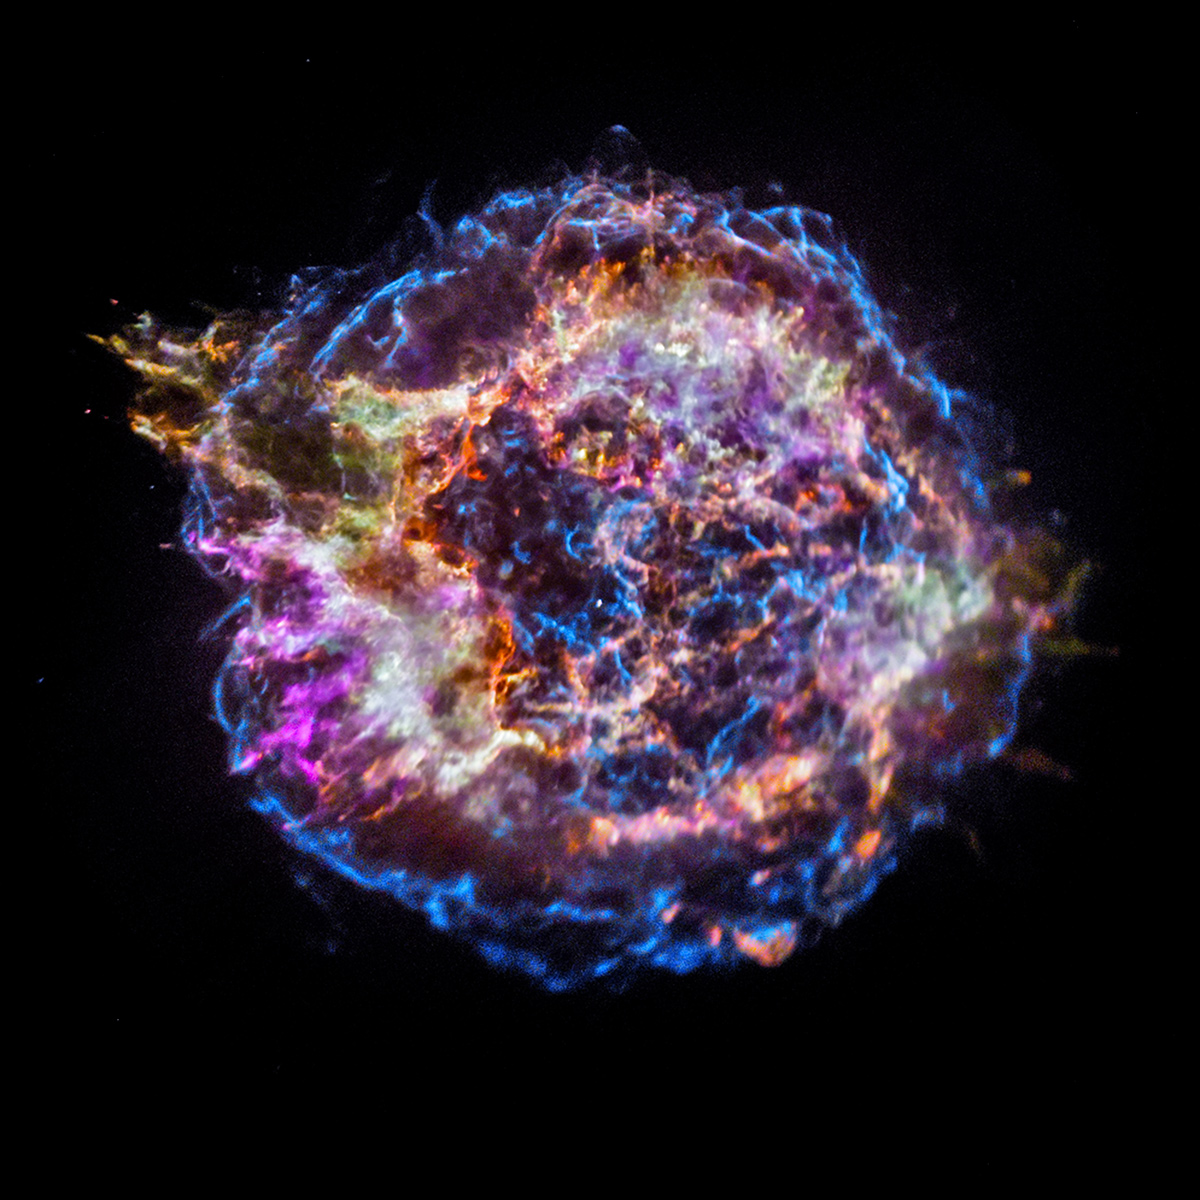 Colorful image of supernova remnant